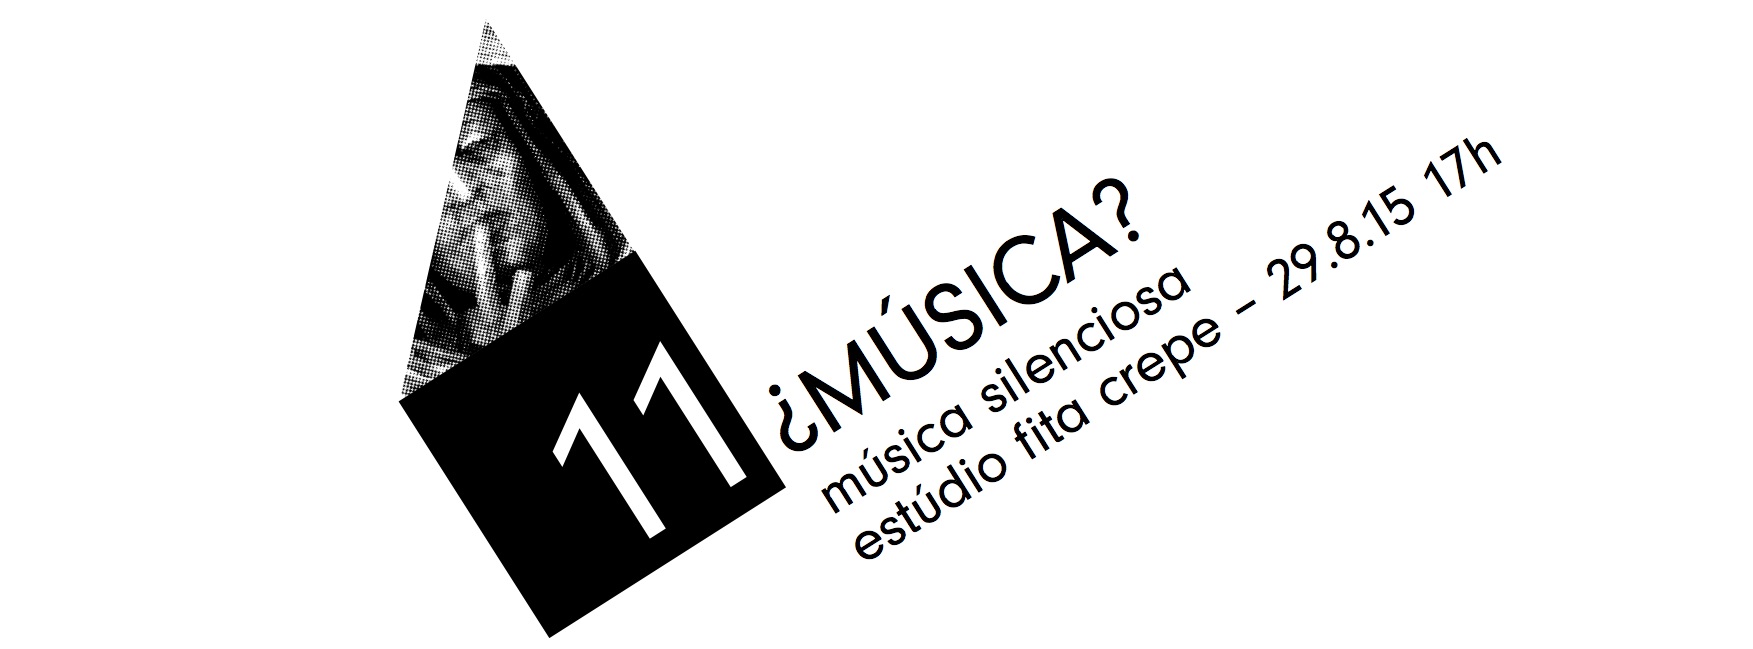 ¿Musica? 11